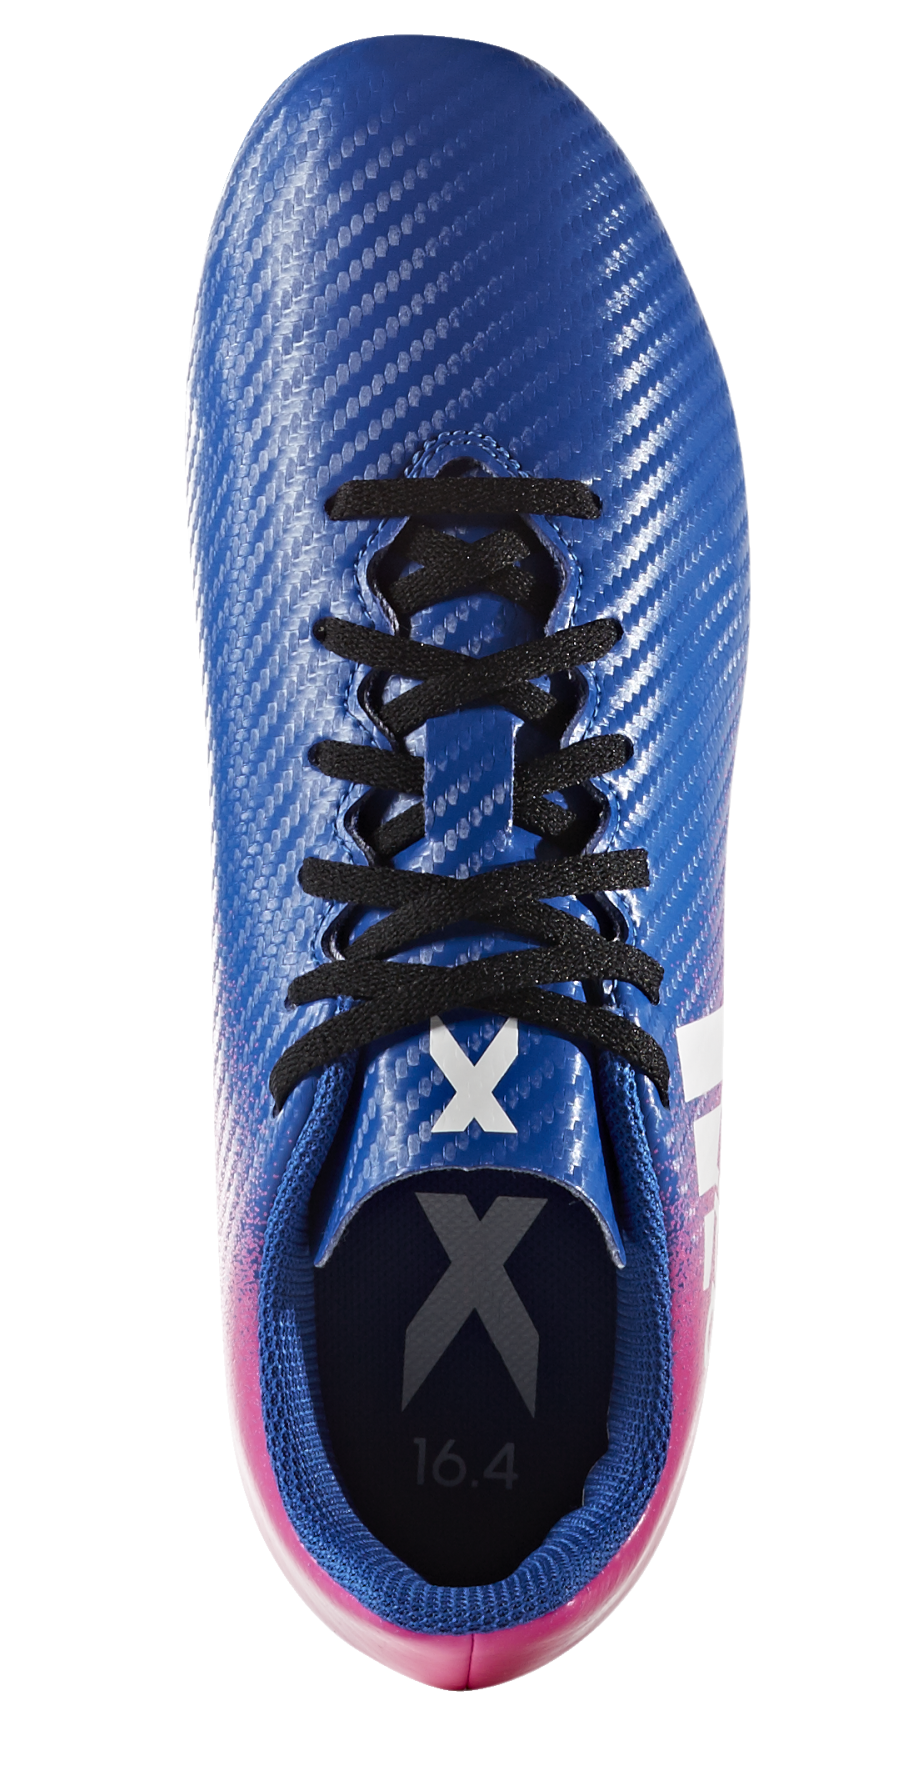 Adidas X 16.4 FxG J